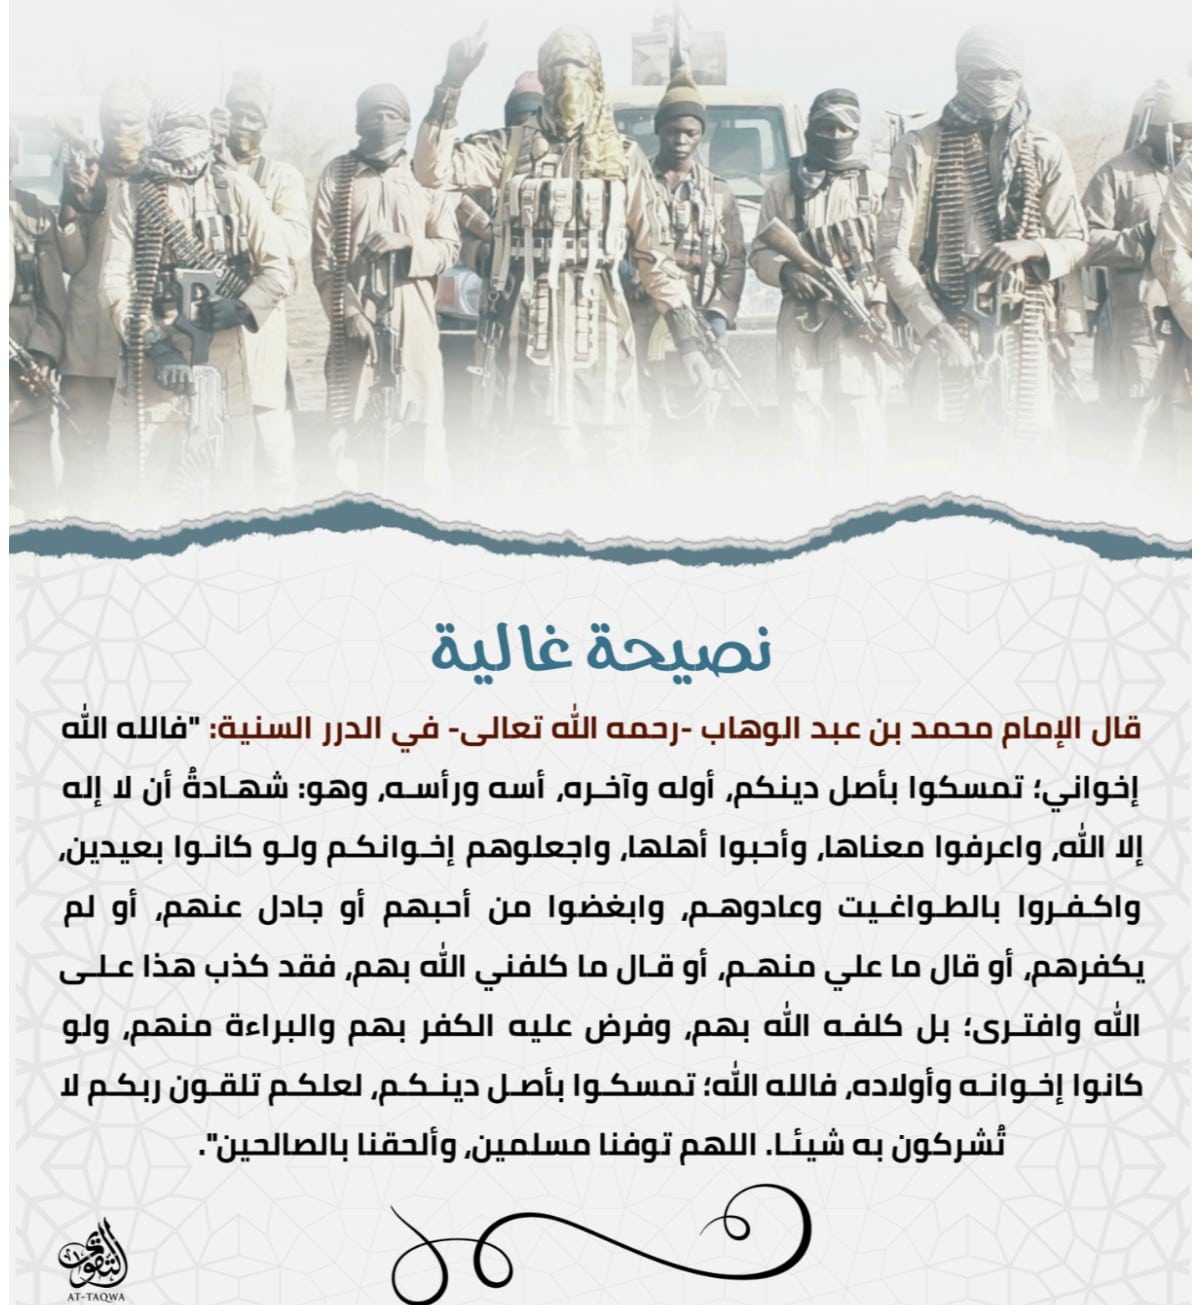 (Poster) al-Taqwa Media (Unofficial Islamic State): "A Precious Advice" - 22 March 2022